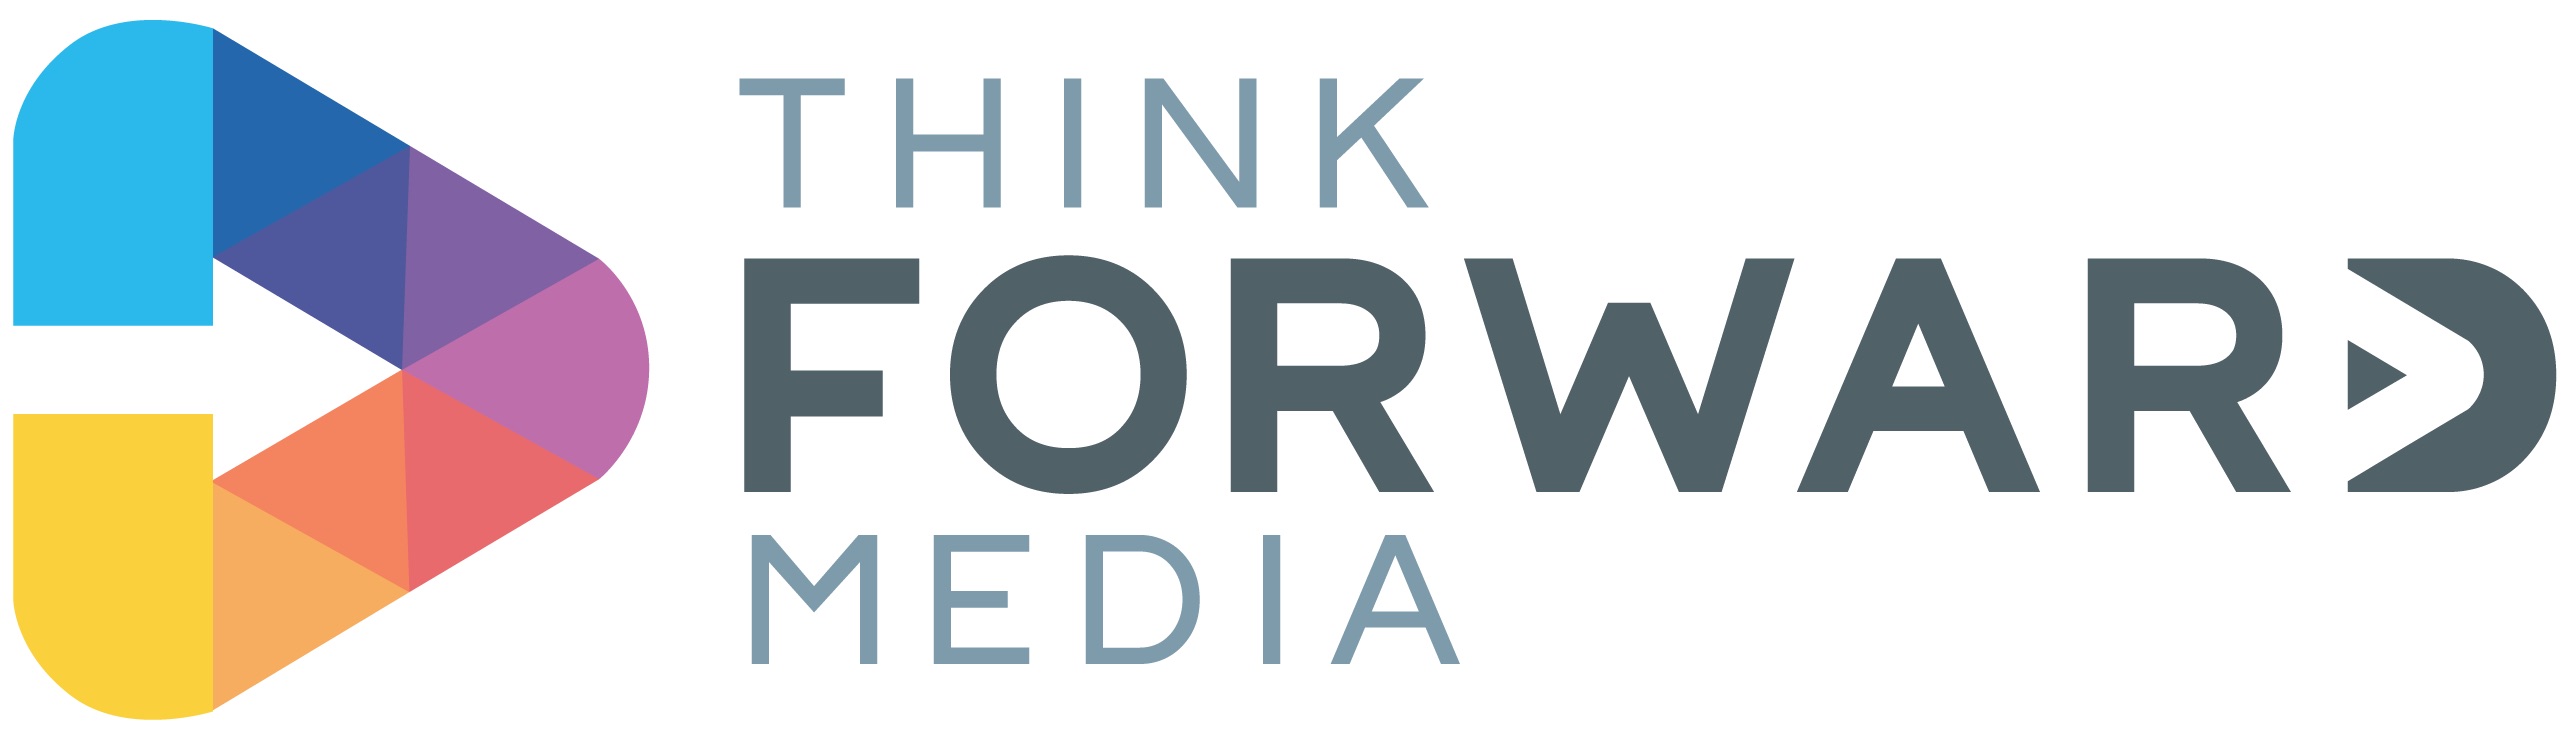 ThinkForward-Logo-light-darkletter.jpg